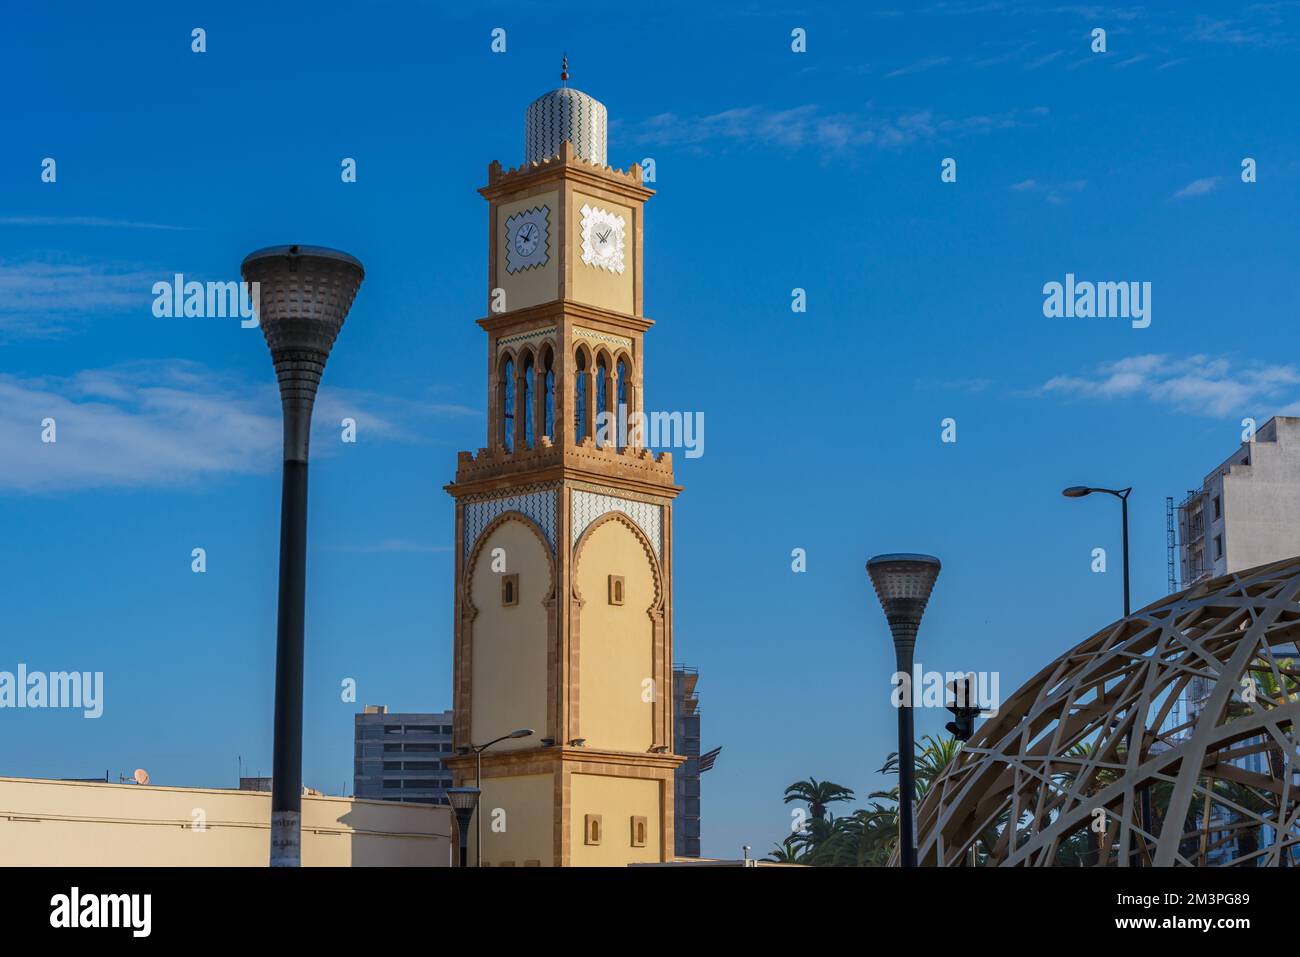 Casablanca Clock Tower in French Tour de l'Horloge against blue sky Stock Photo